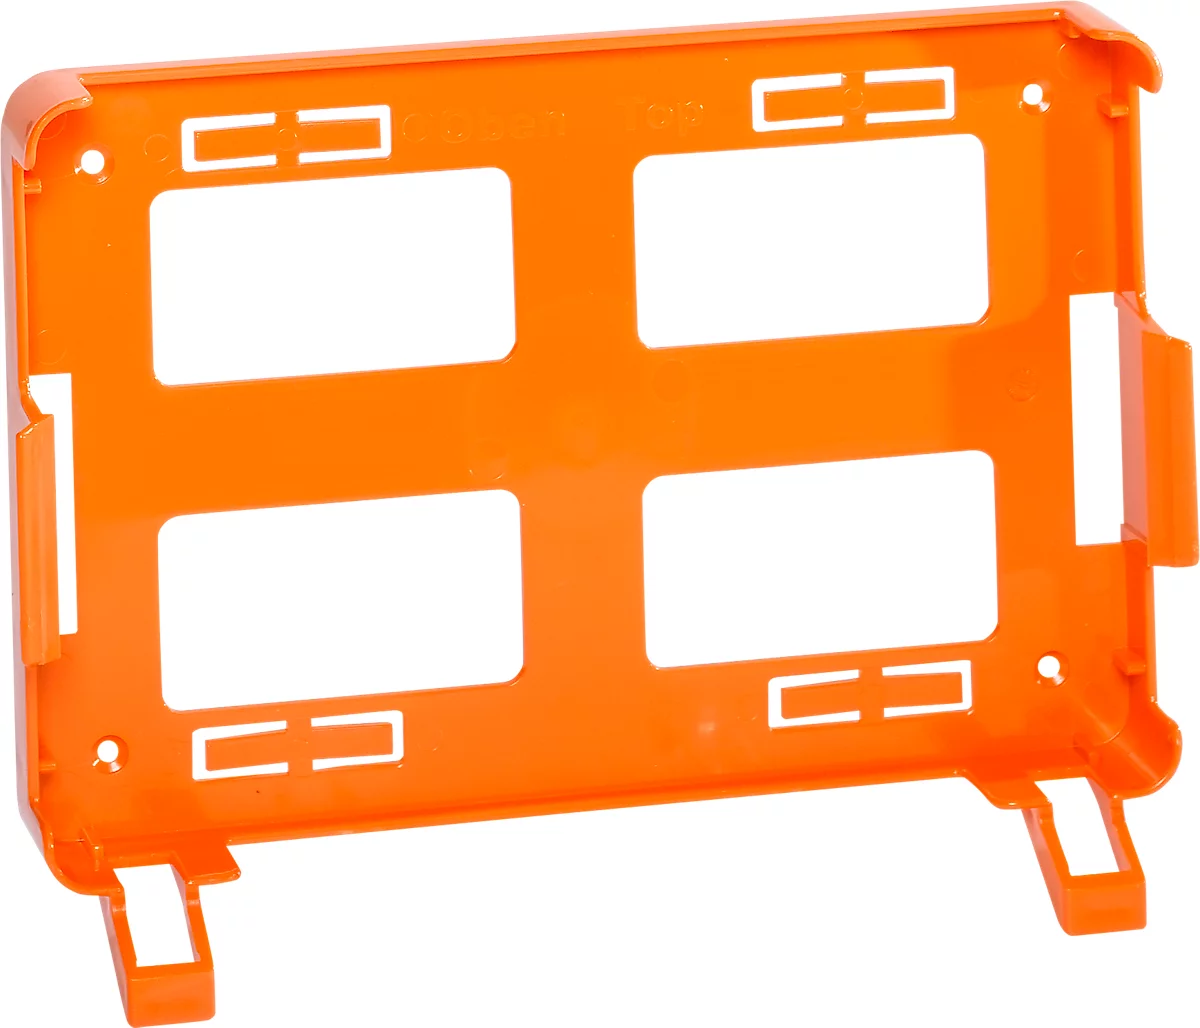 Botiquín SÖHNGEN® QUICK, contenido según DIN 13 157, con compartimentos interiores y soporte de pared, L 260 x A 170 x A 110 mm, plástico ABS, naranja